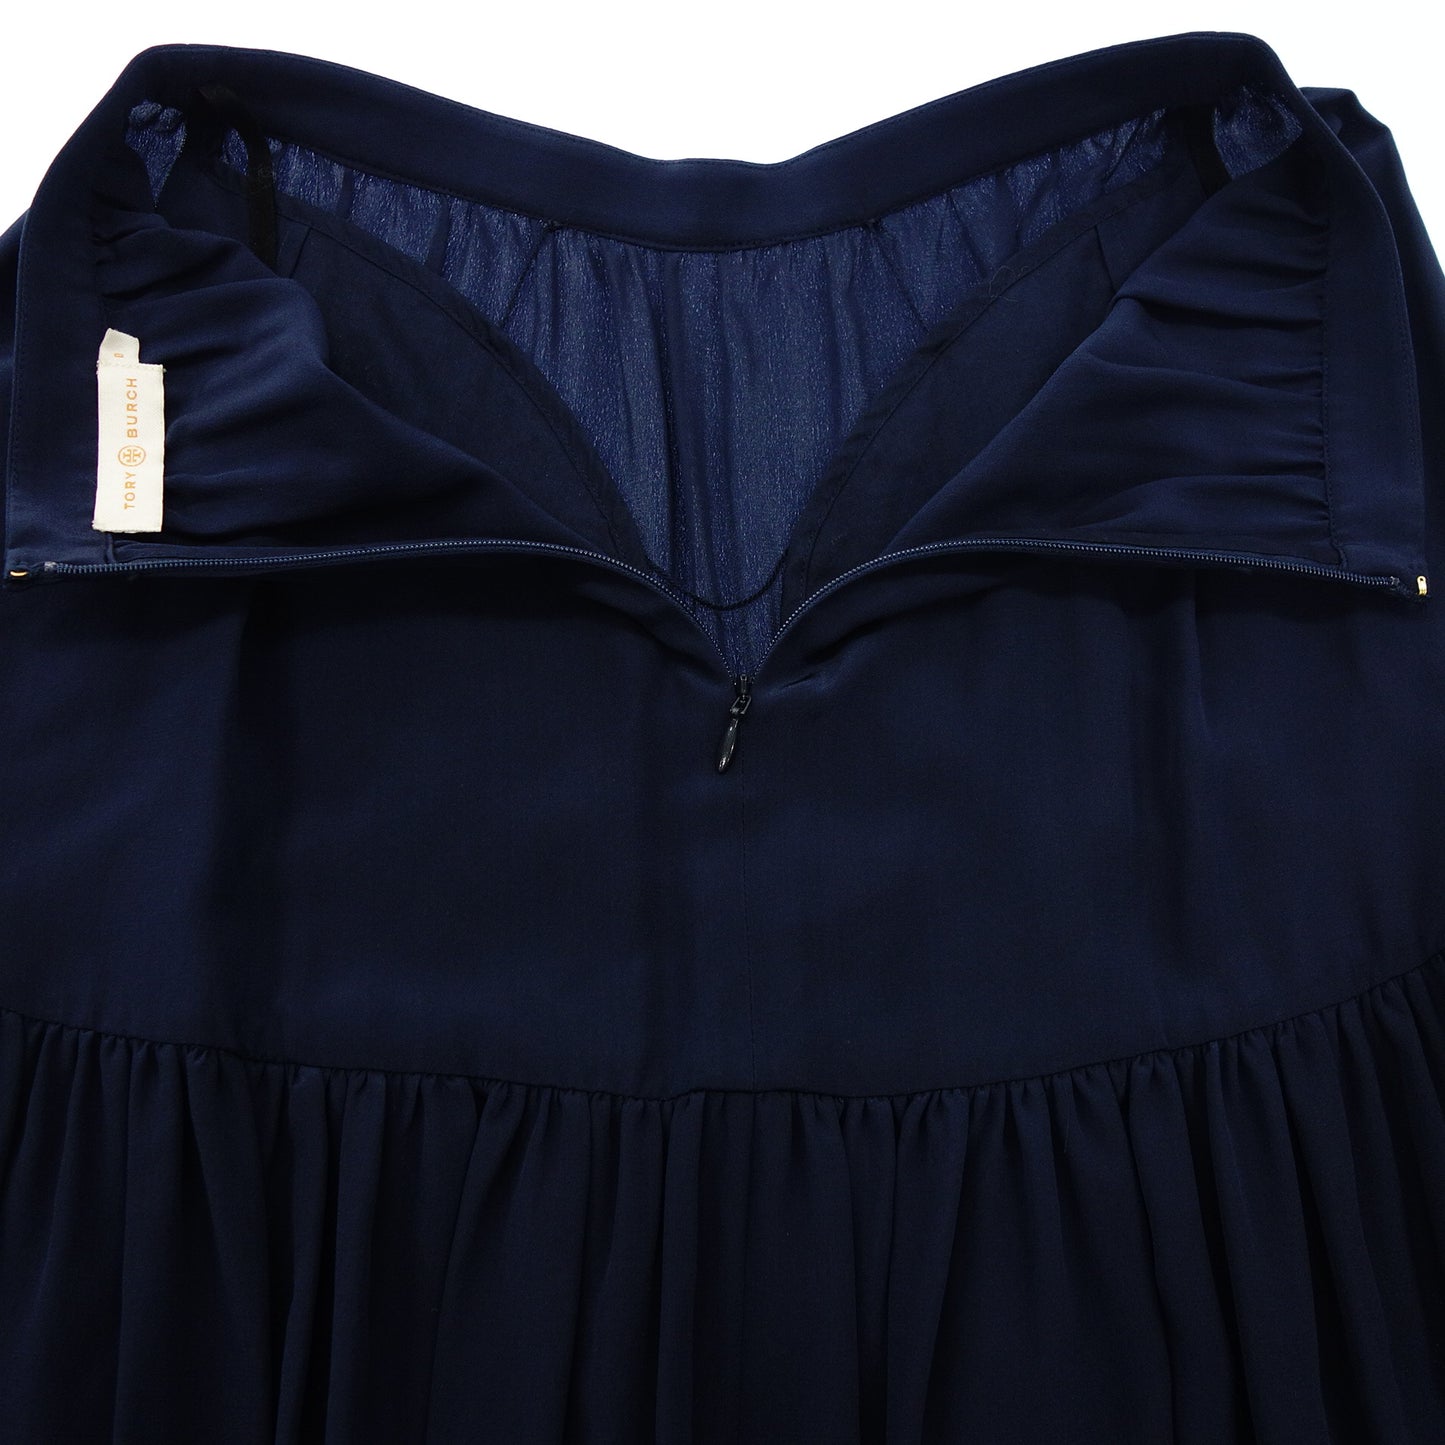 Tory Burch Silk Skirt Women's 0 Navy TORY BURCH [AFB4] [Used] 